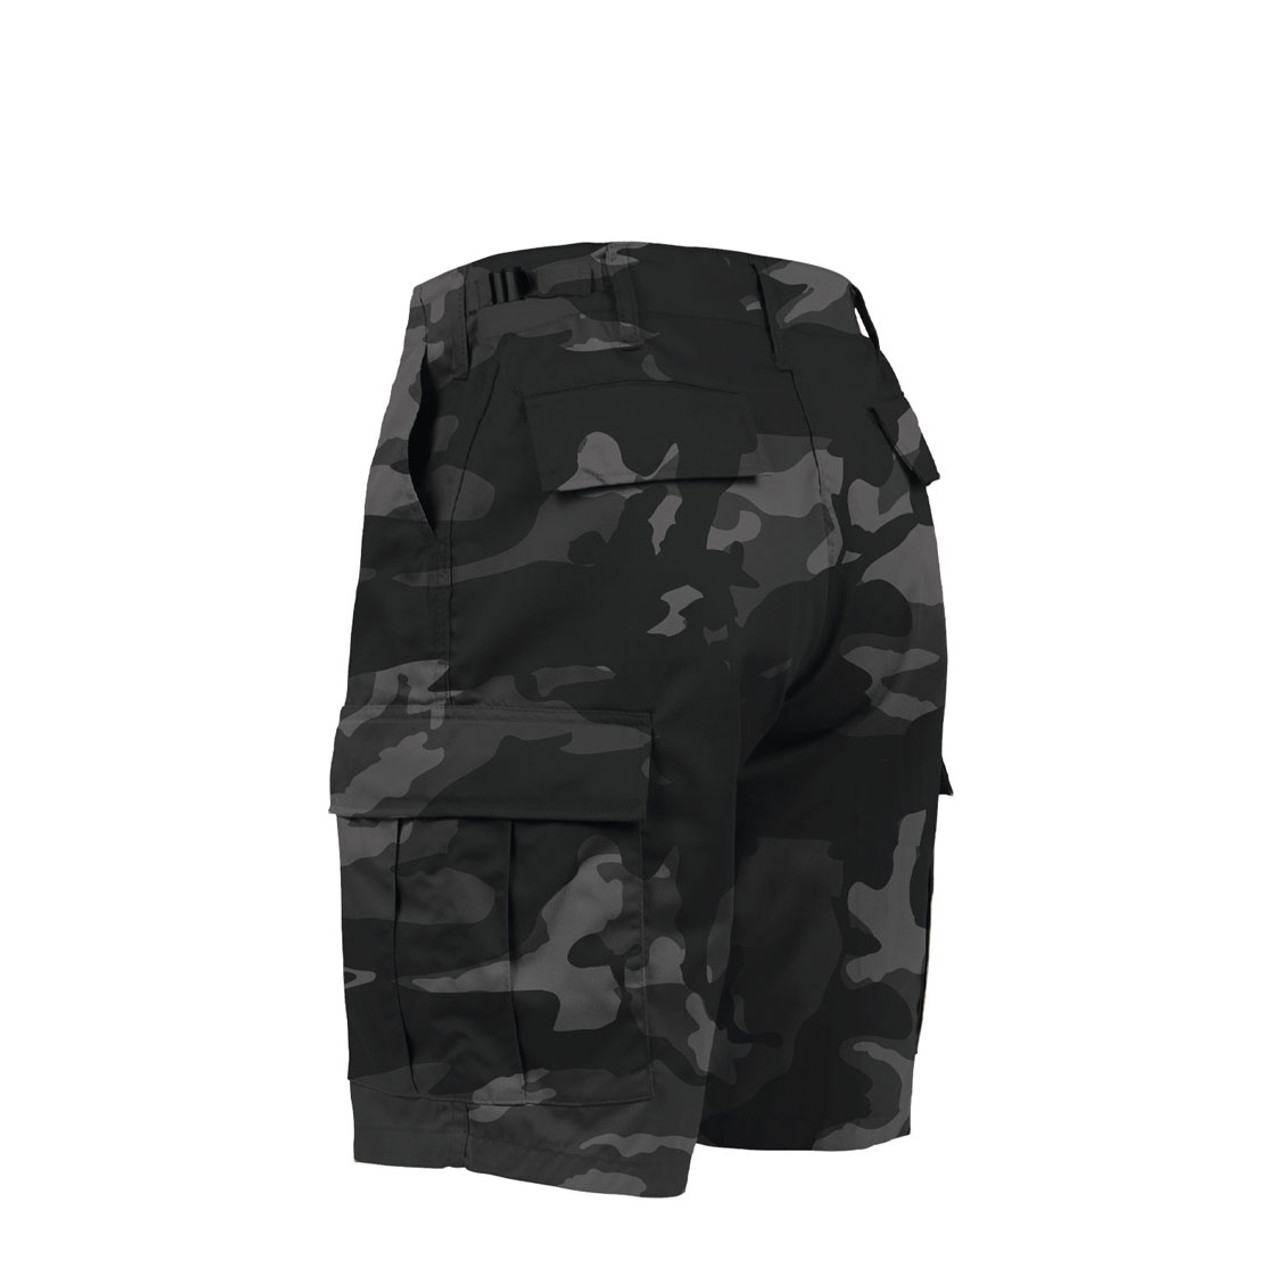 Shop Black Camo BDU Shorts - Fatigues Army Navy